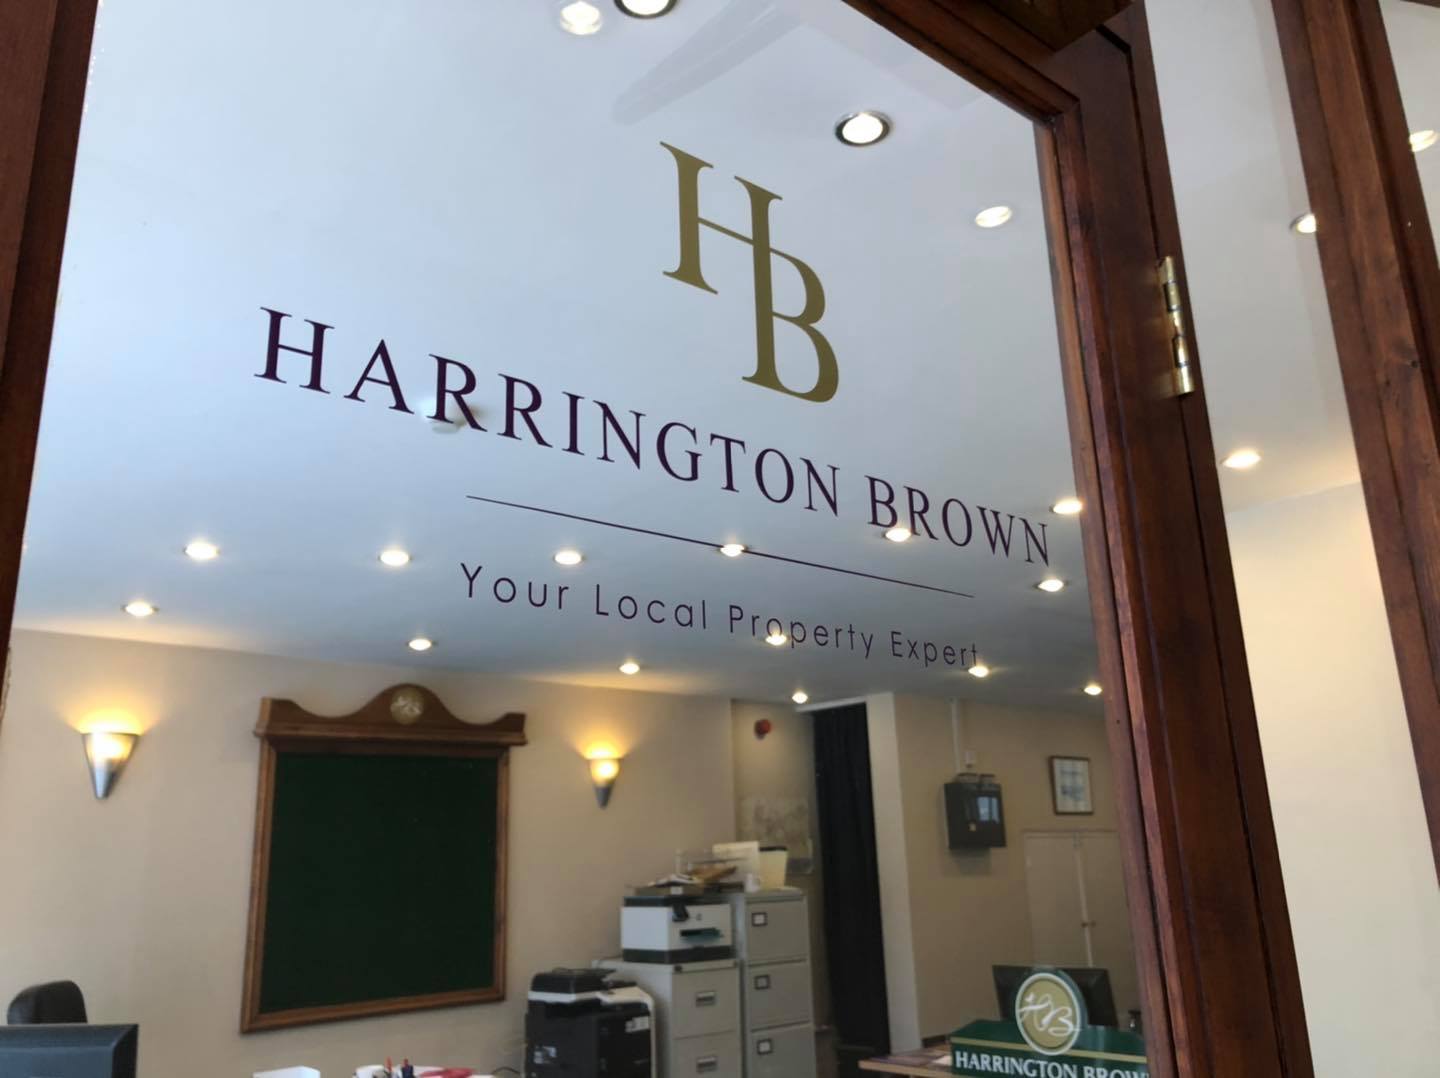 Harrington Brown